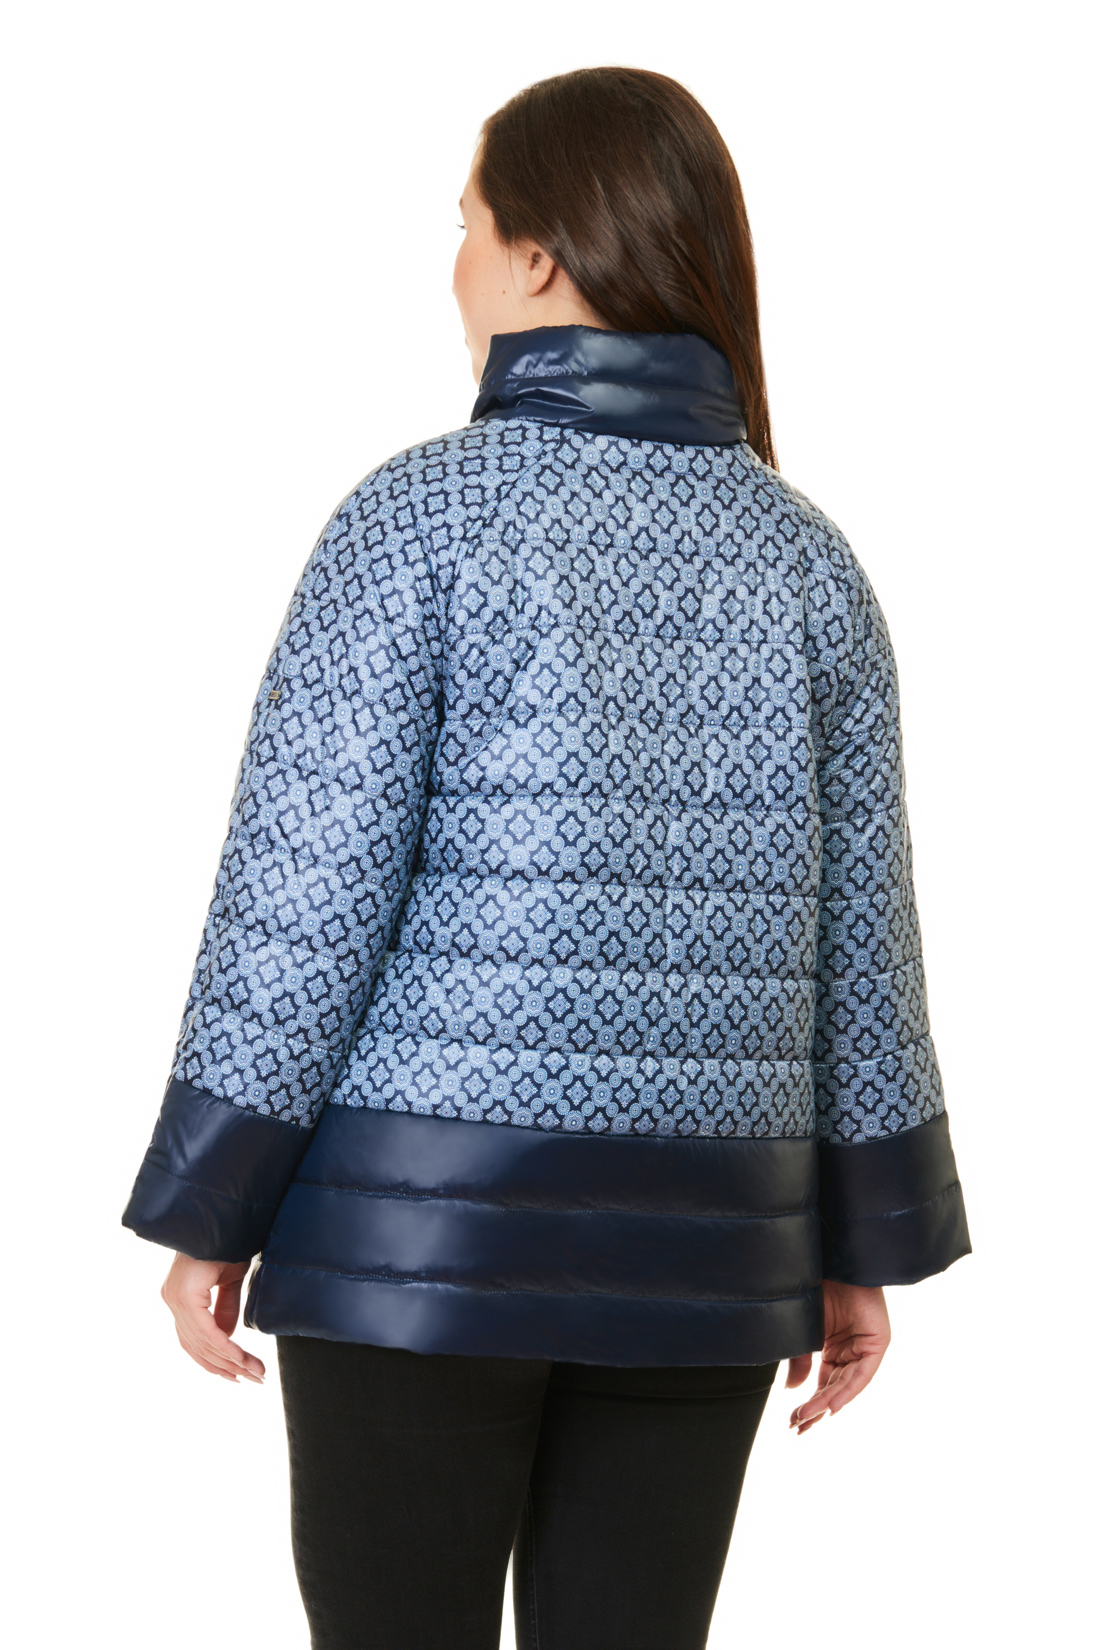 Куртка SIZE+ с орнаментом (арт. baon B037121), размер 56, цвет dark navy printed#синий Куртка SIZE+ с орнаментом (арт. baon B037121) - фото 2